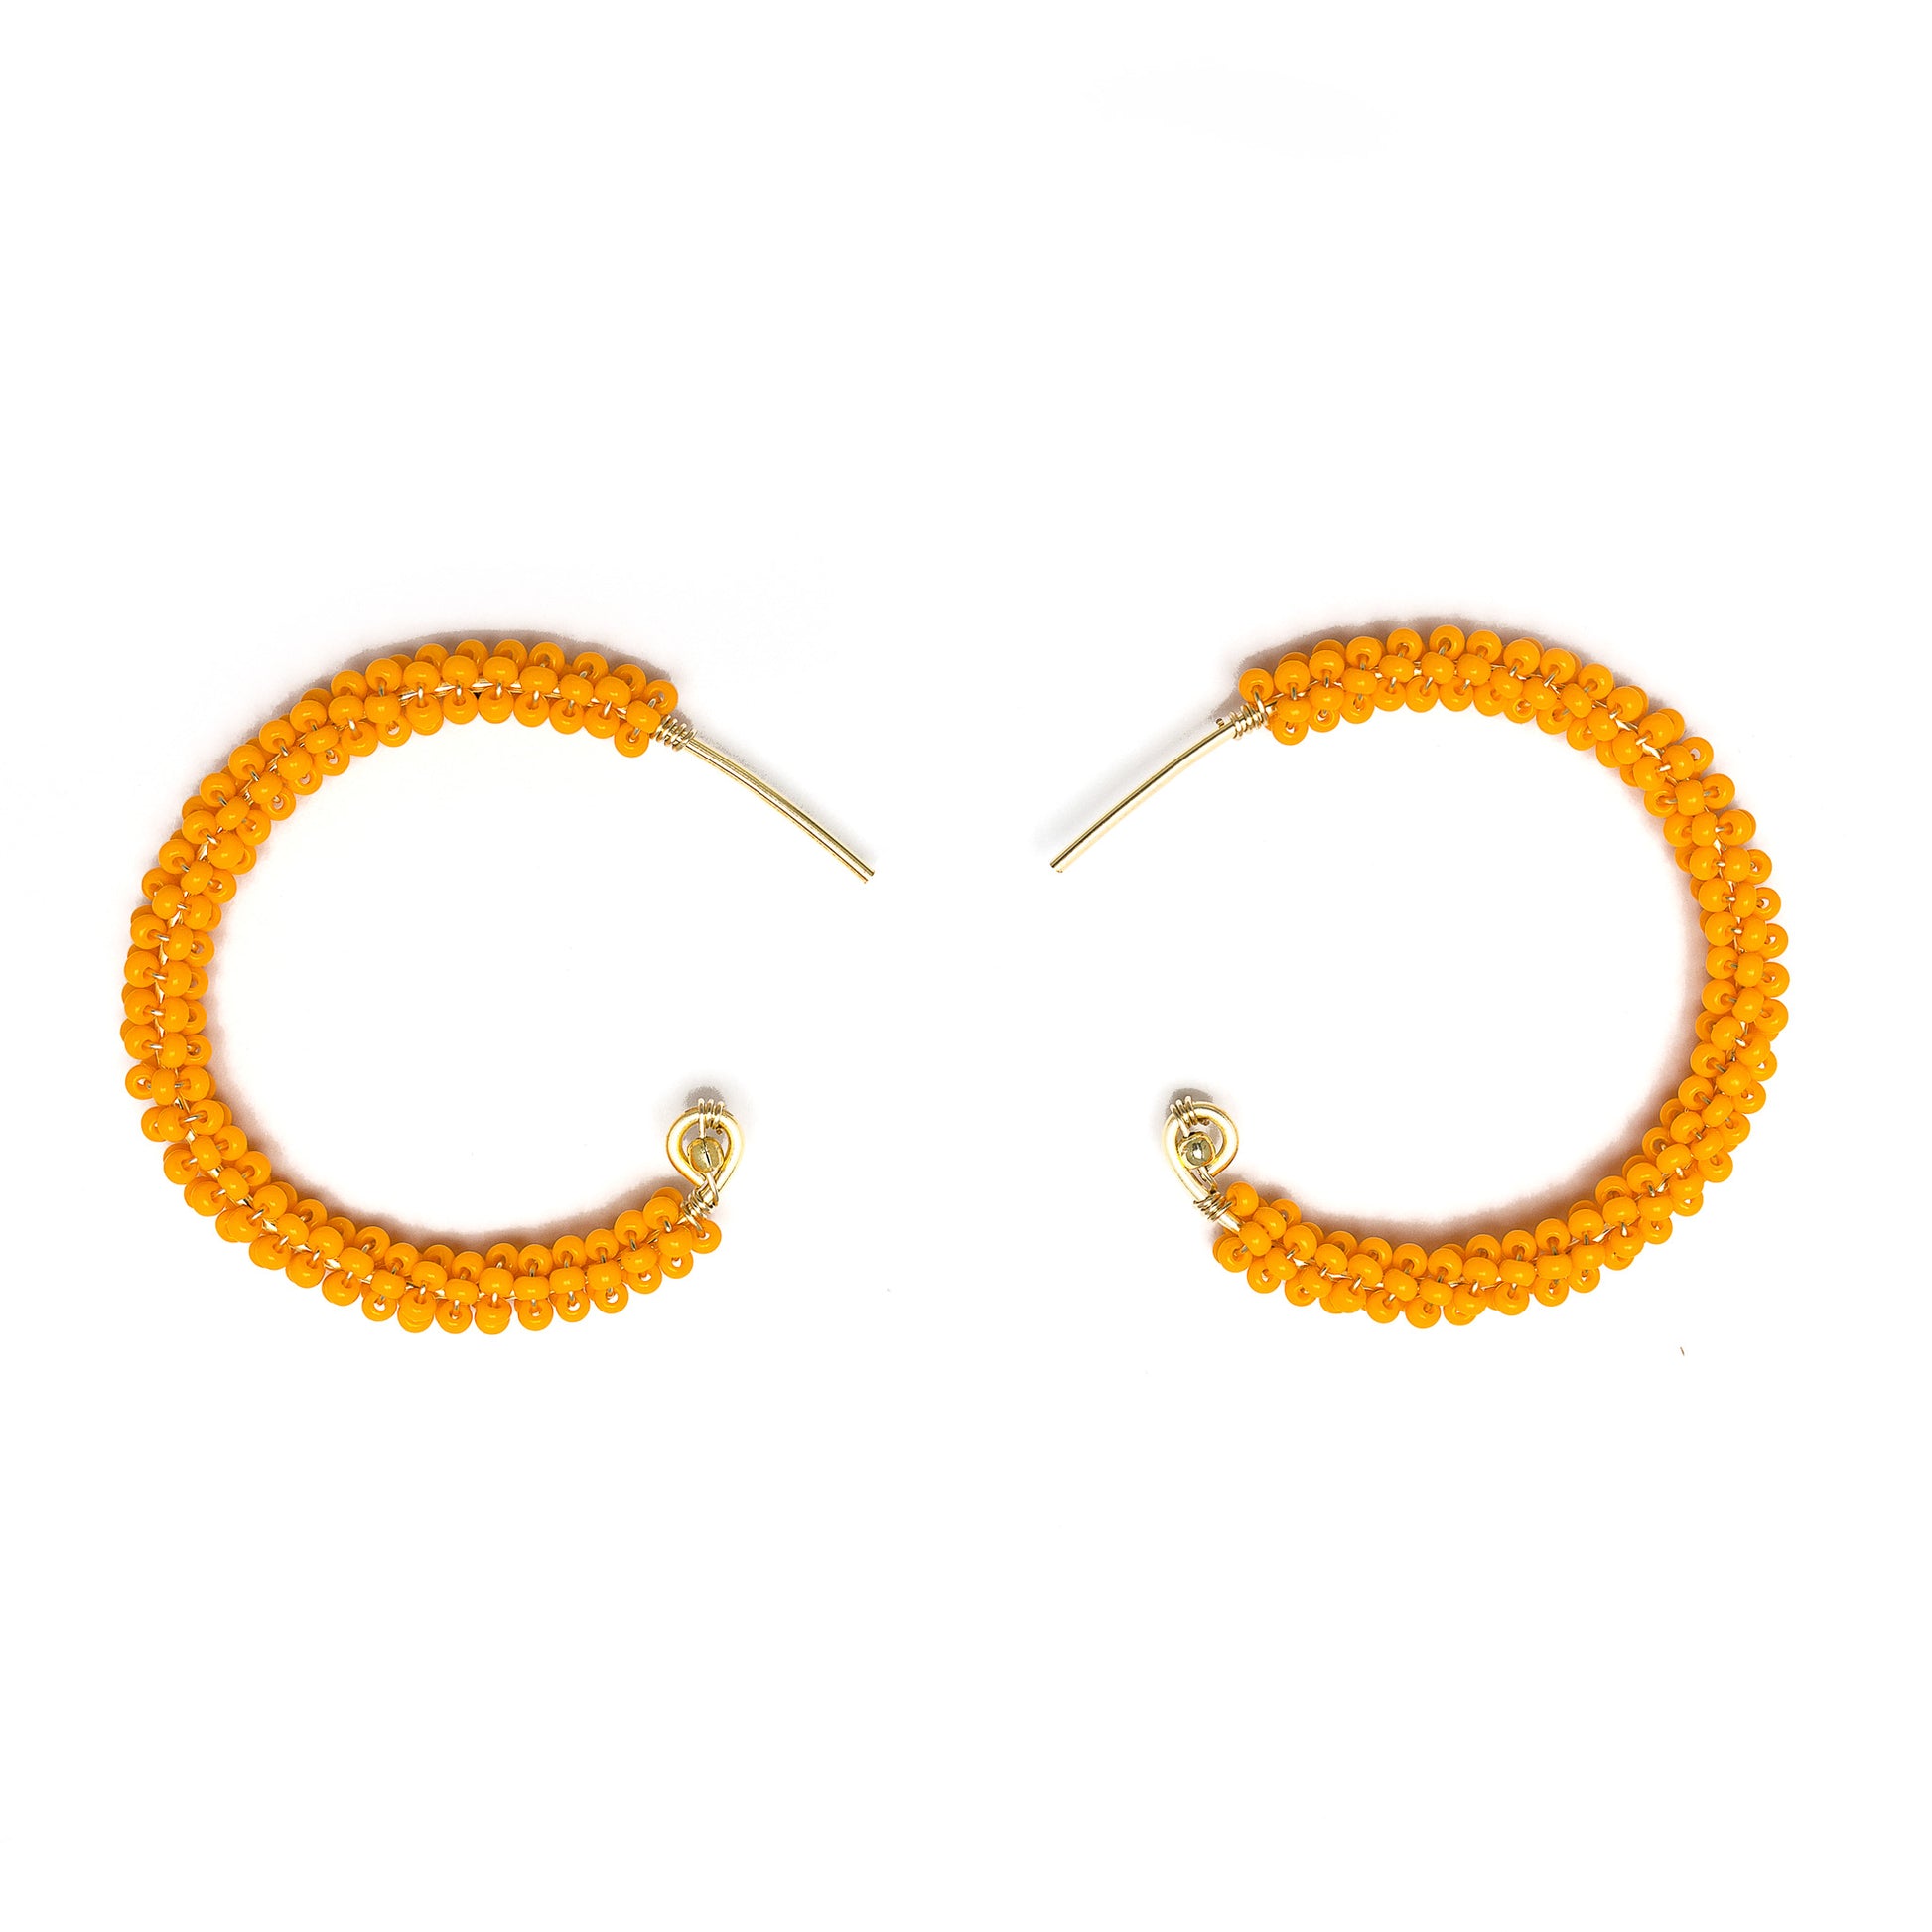 Florence gold Hoop Earrings are 1.5 inches long, Gold and Mandarin Orange Earrings. Wire Wrapped Earrings. Lightweight and comfortable earrings. Handmade for women. Open hoop earrings.